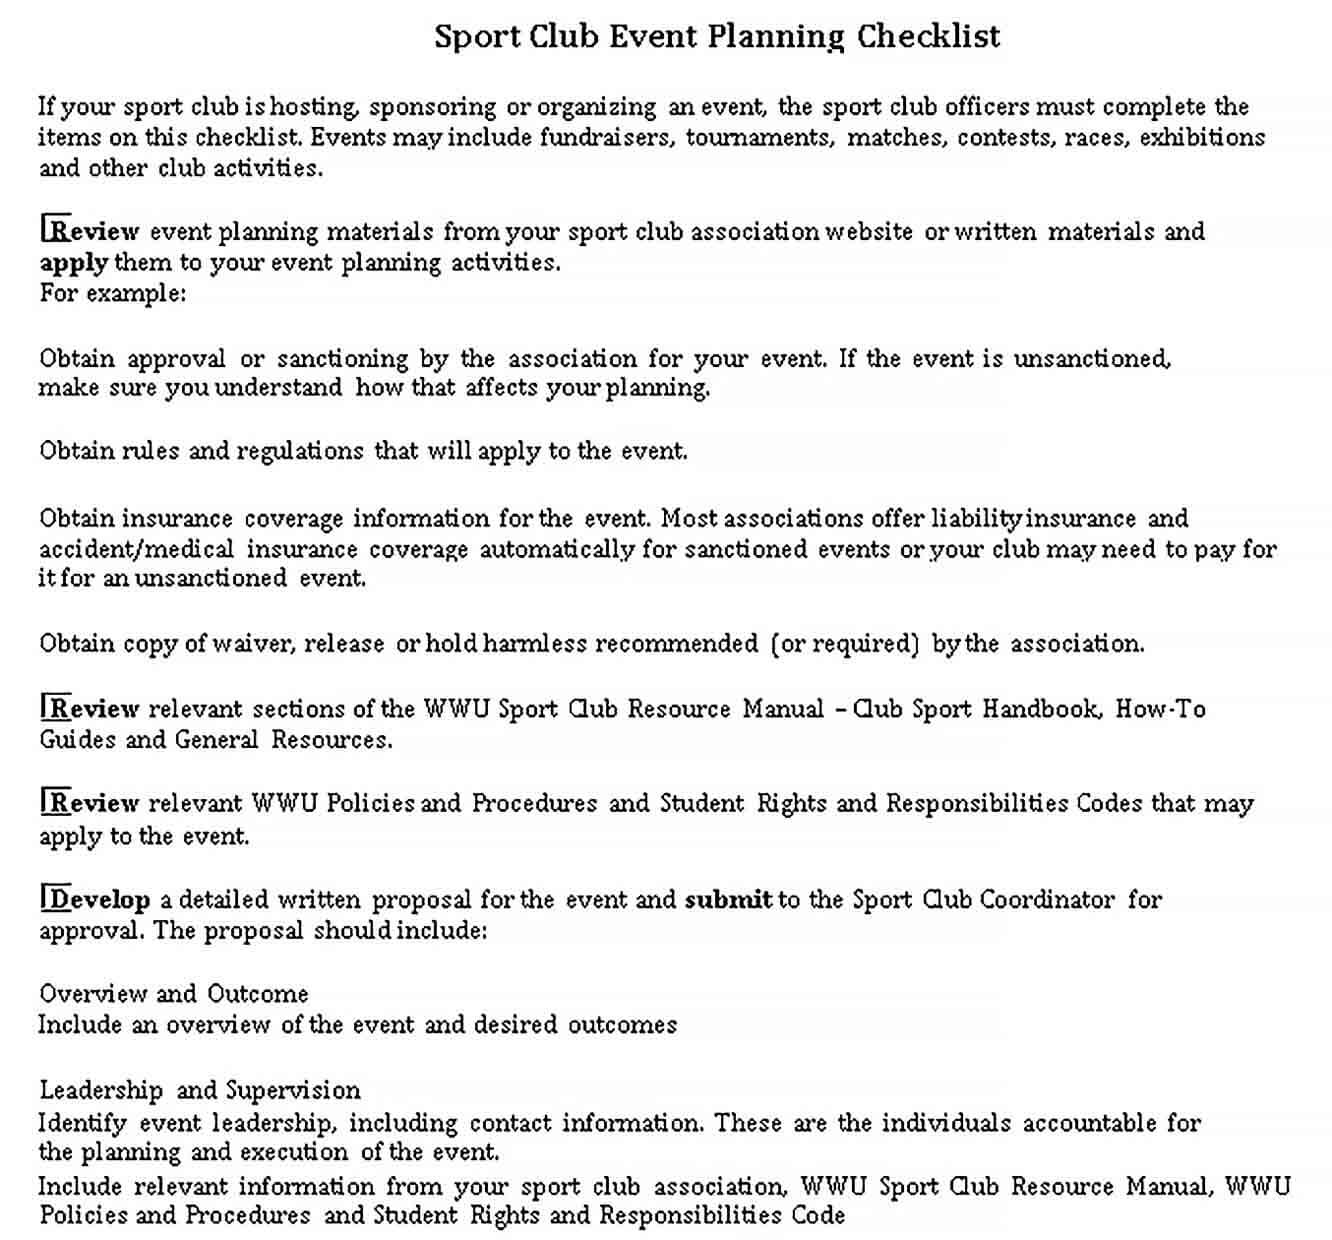 Sample Sport Club Event Planning Checklist